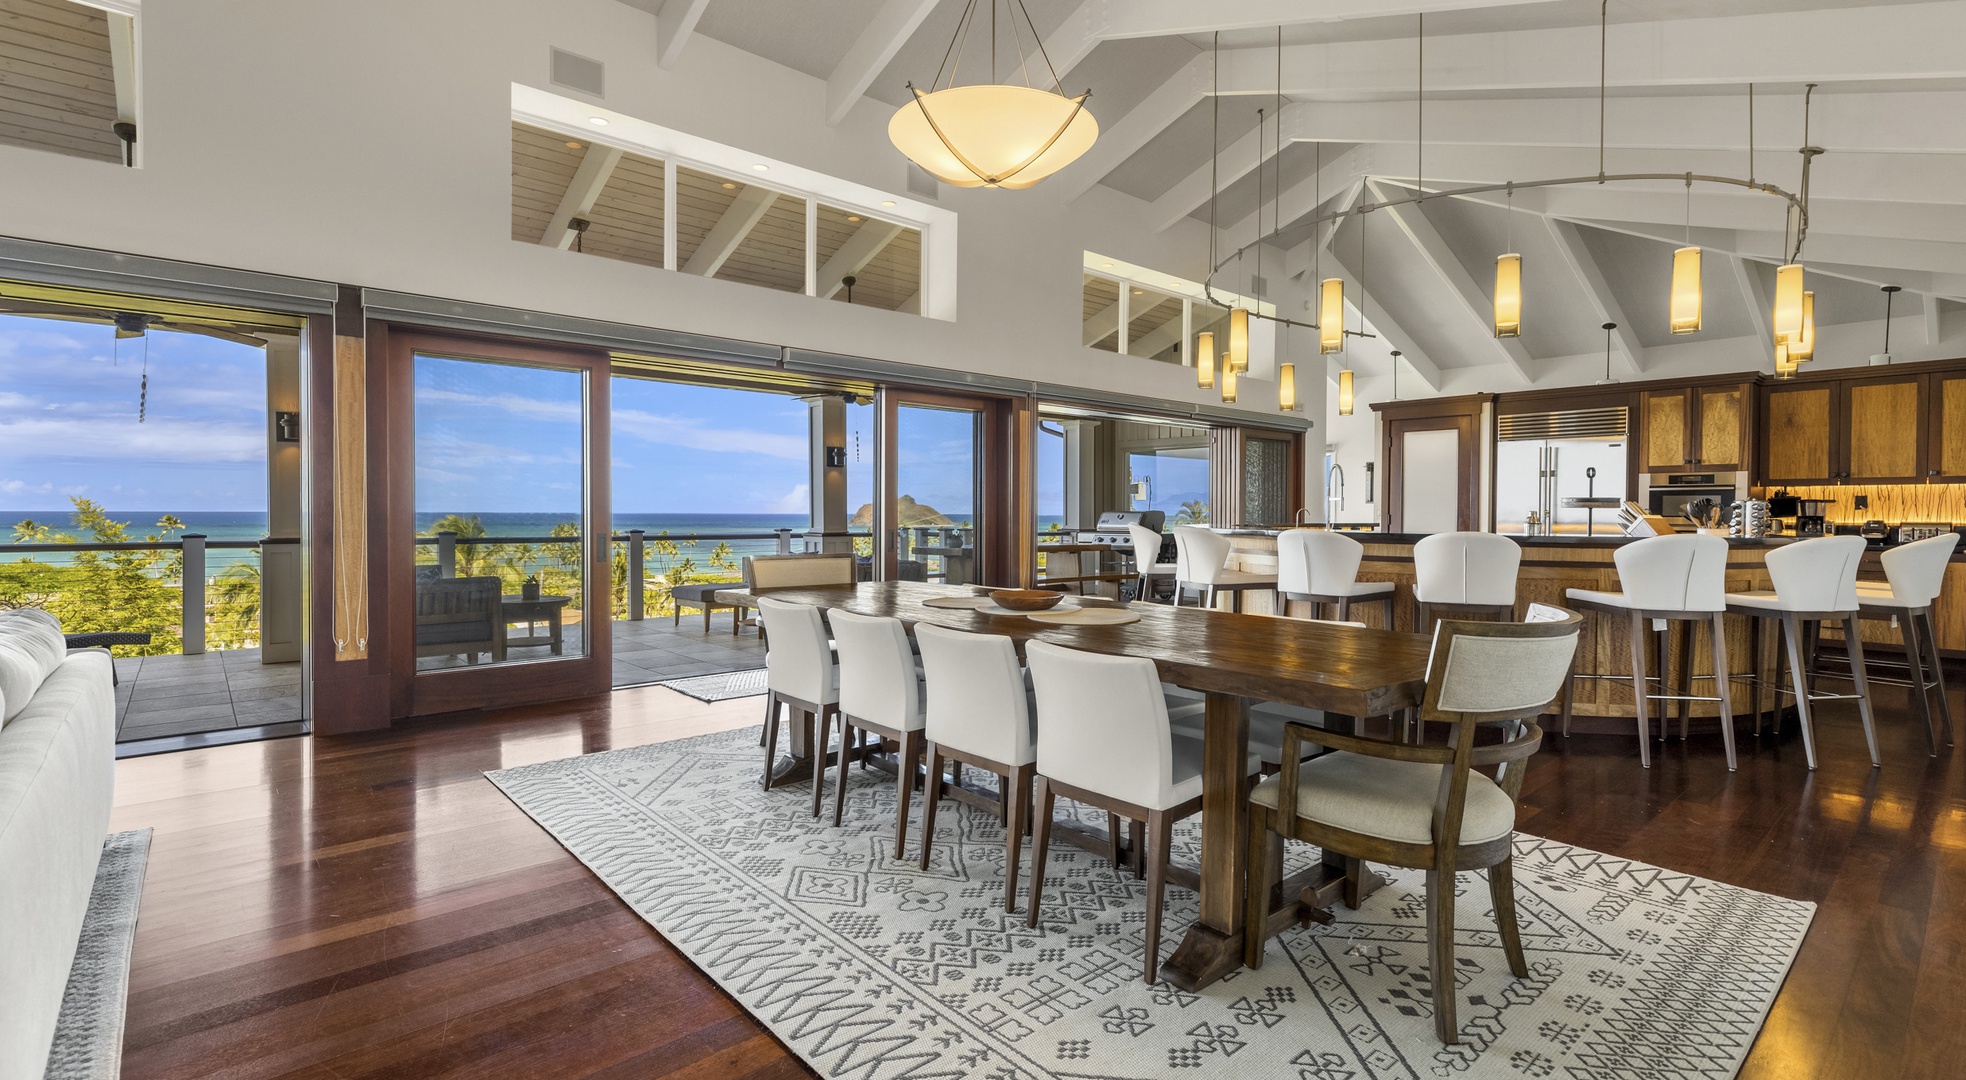 Kailua Vacation Rentals, Lanikai Villa* - Indoor formal dining area comfortably seats 10